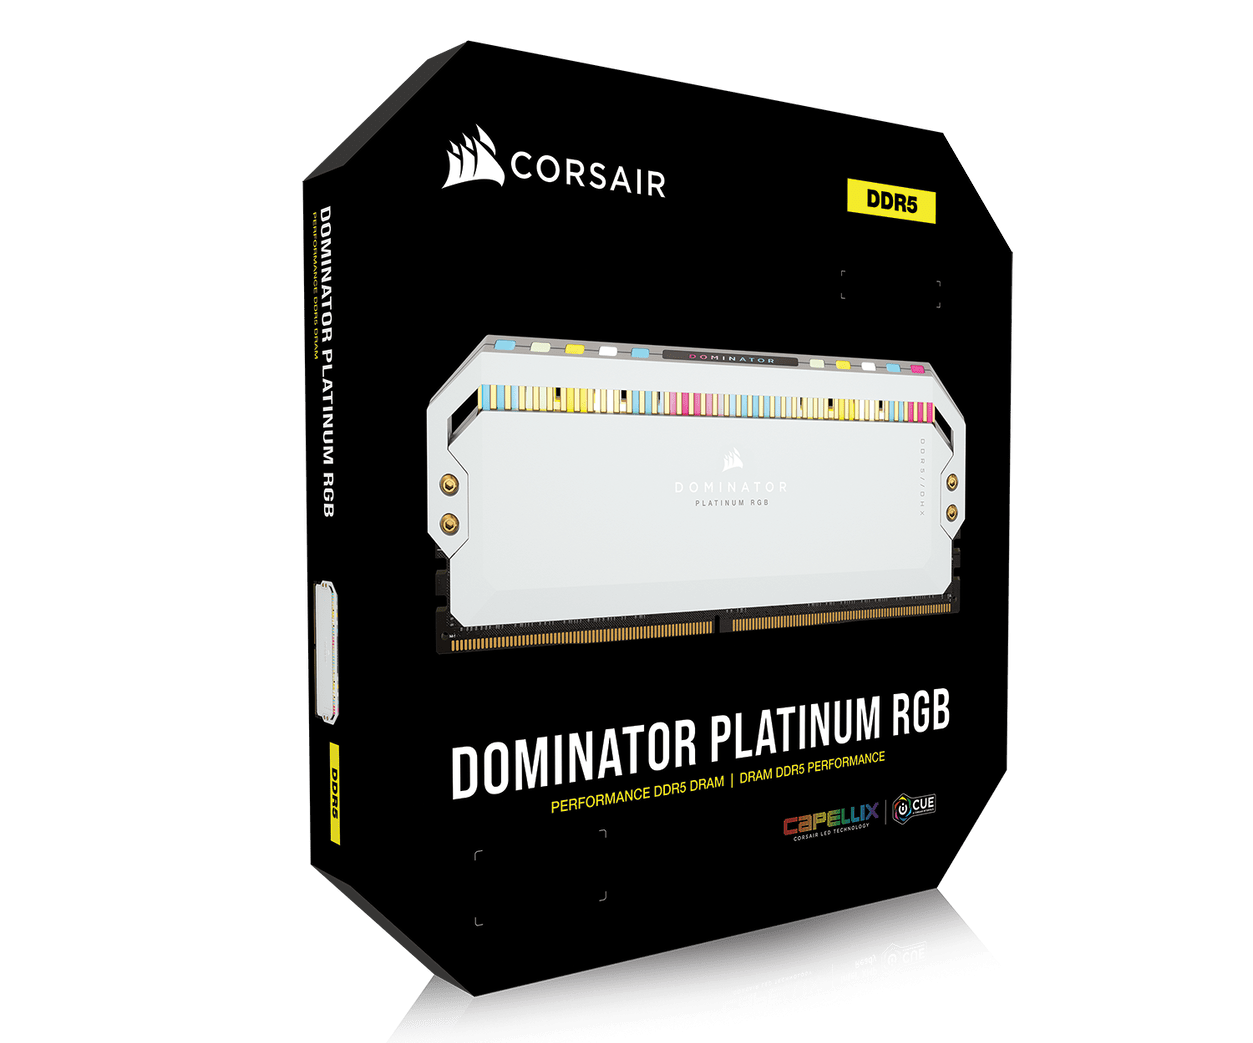 Recensione Corsair Dominator Platinum RGB DDR5: ecco la nuova Gen